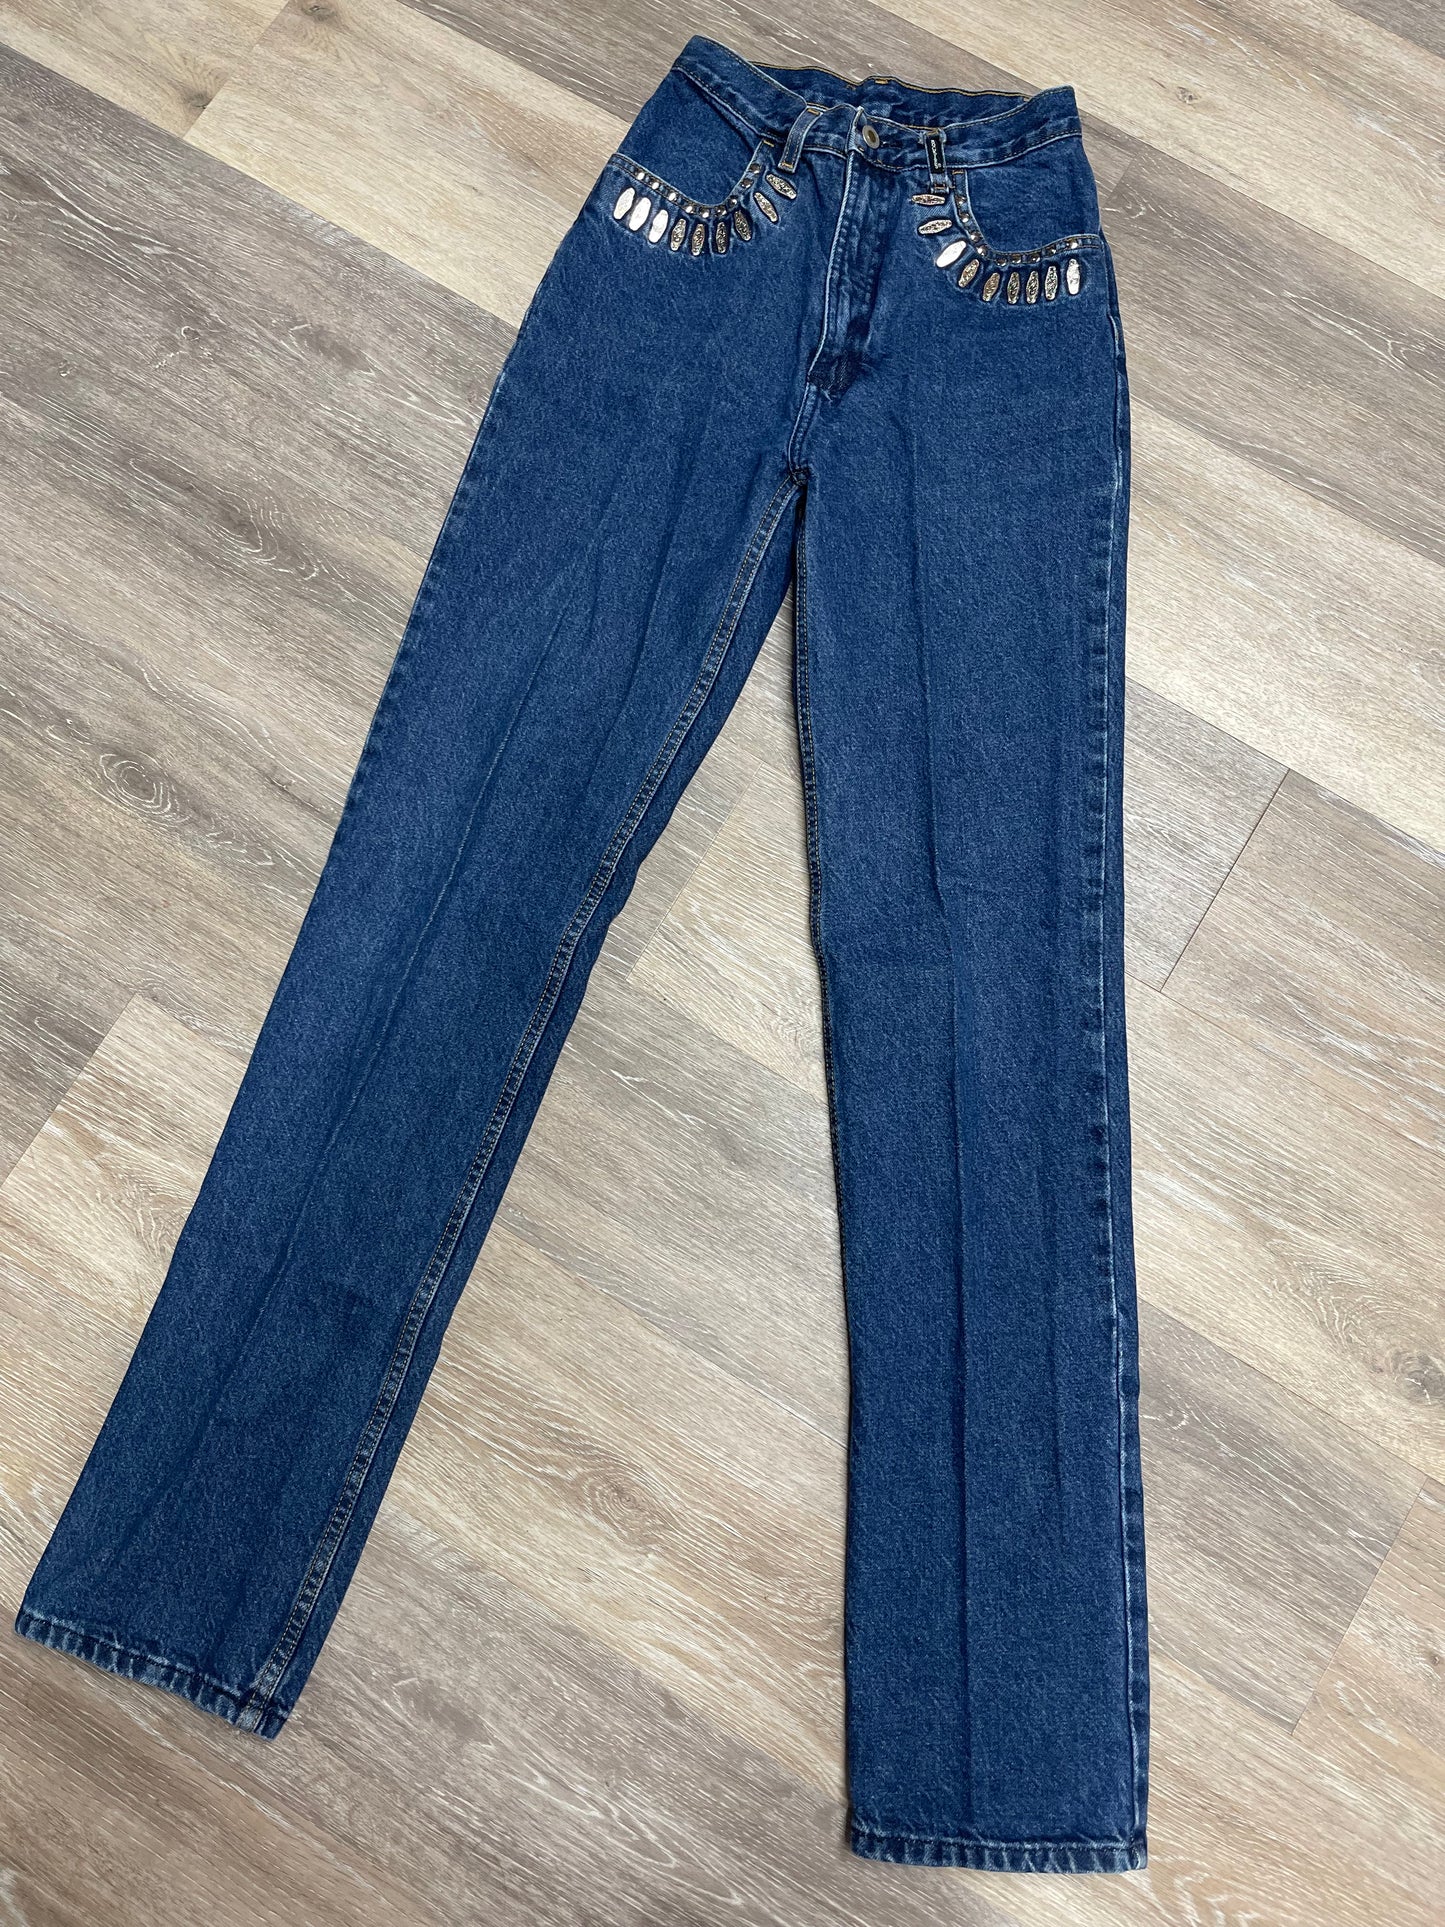 Size 26/3 XL Vintage Rockies Denim Jeans with studded pocket detail